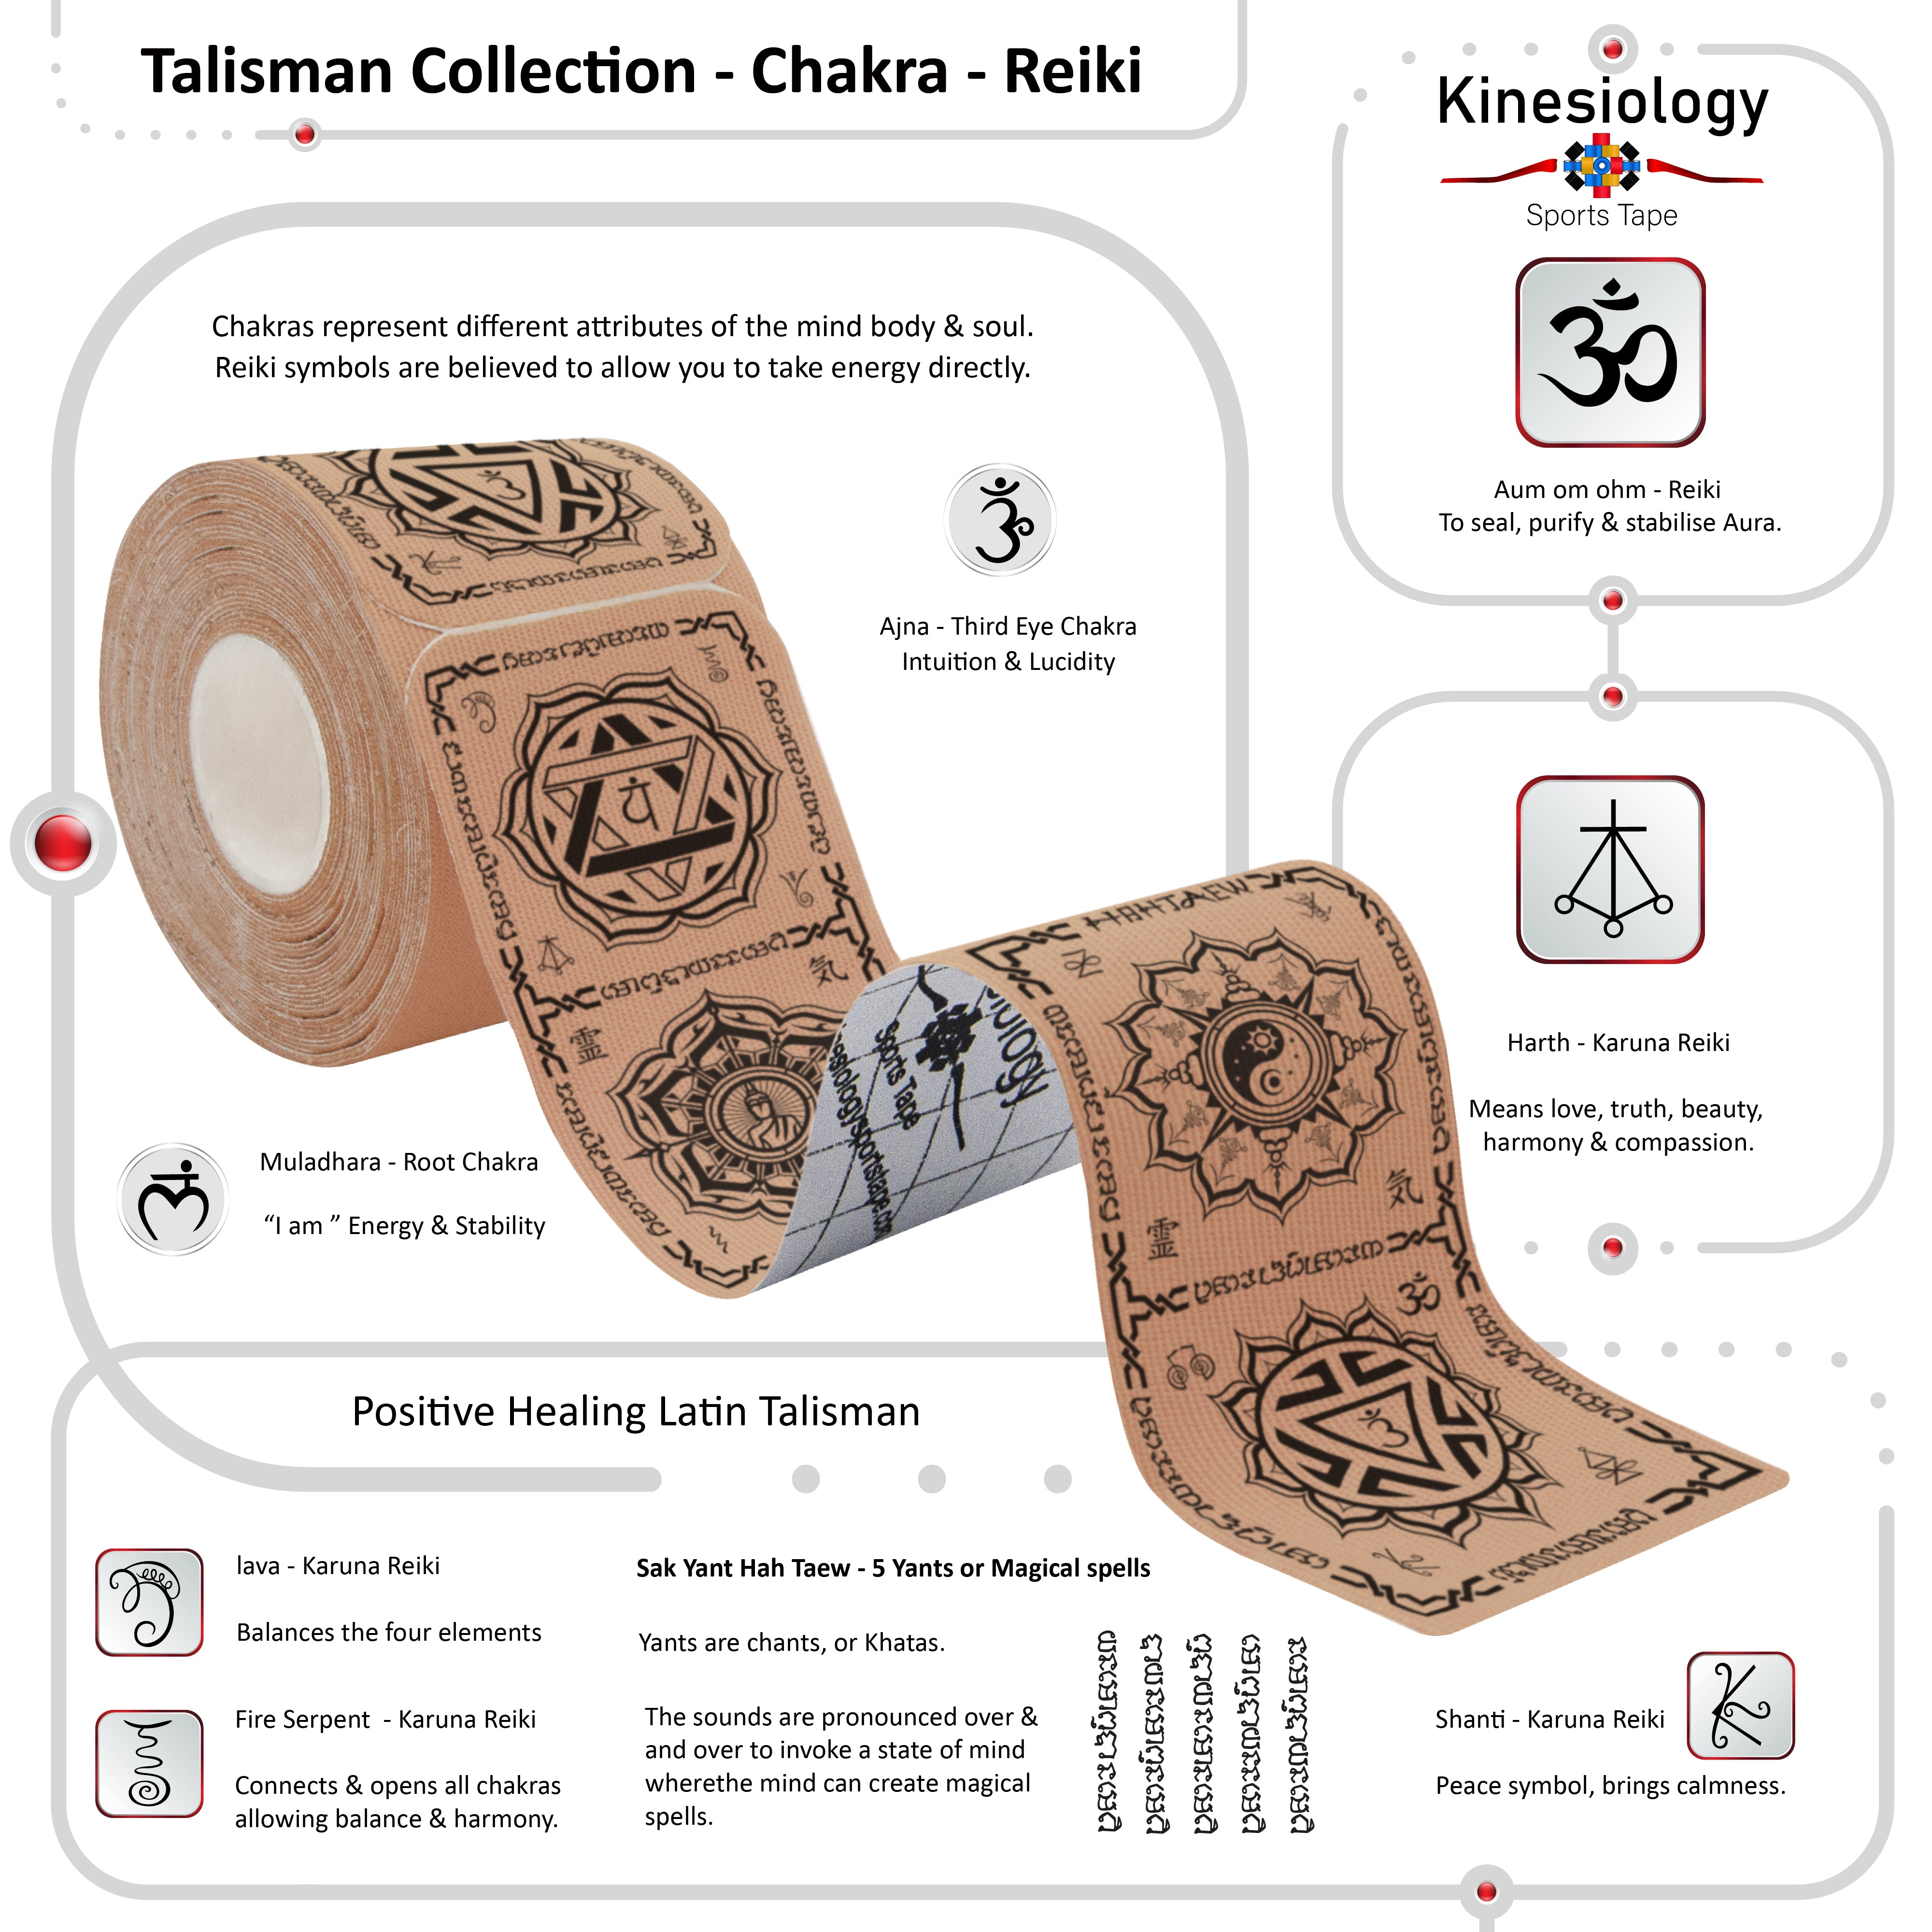 Beige Kinesiology Tape Pre Cut with Dispenser - Talisman - Chakra - Vertical Design